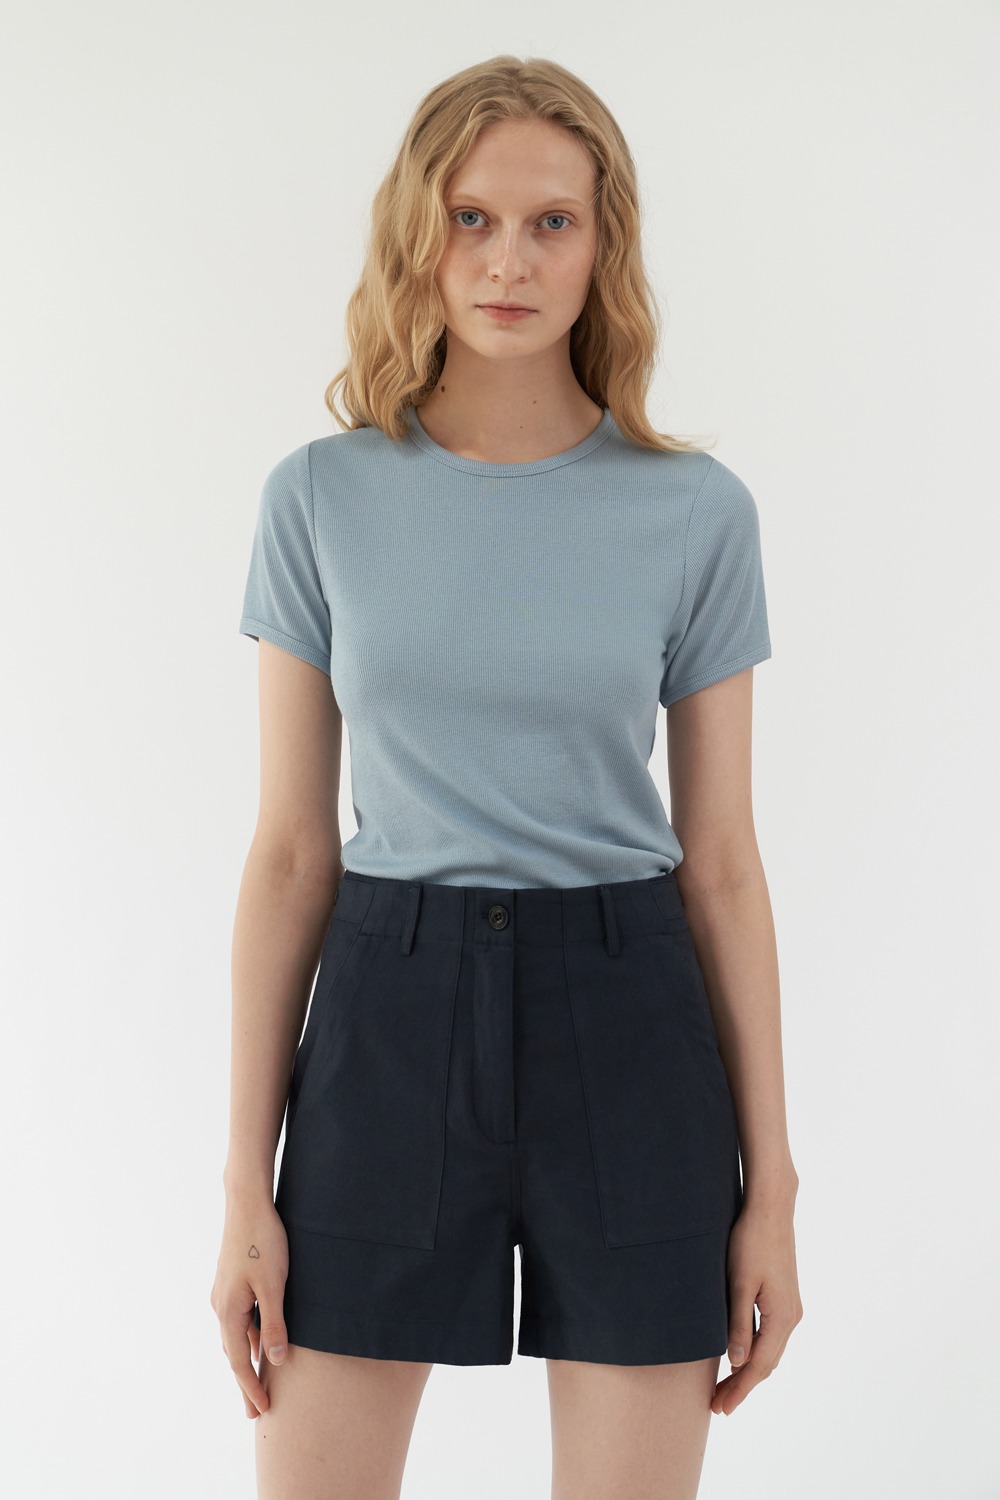 [-20%] Ribbed Slim T-Shirt ( Powder blue )